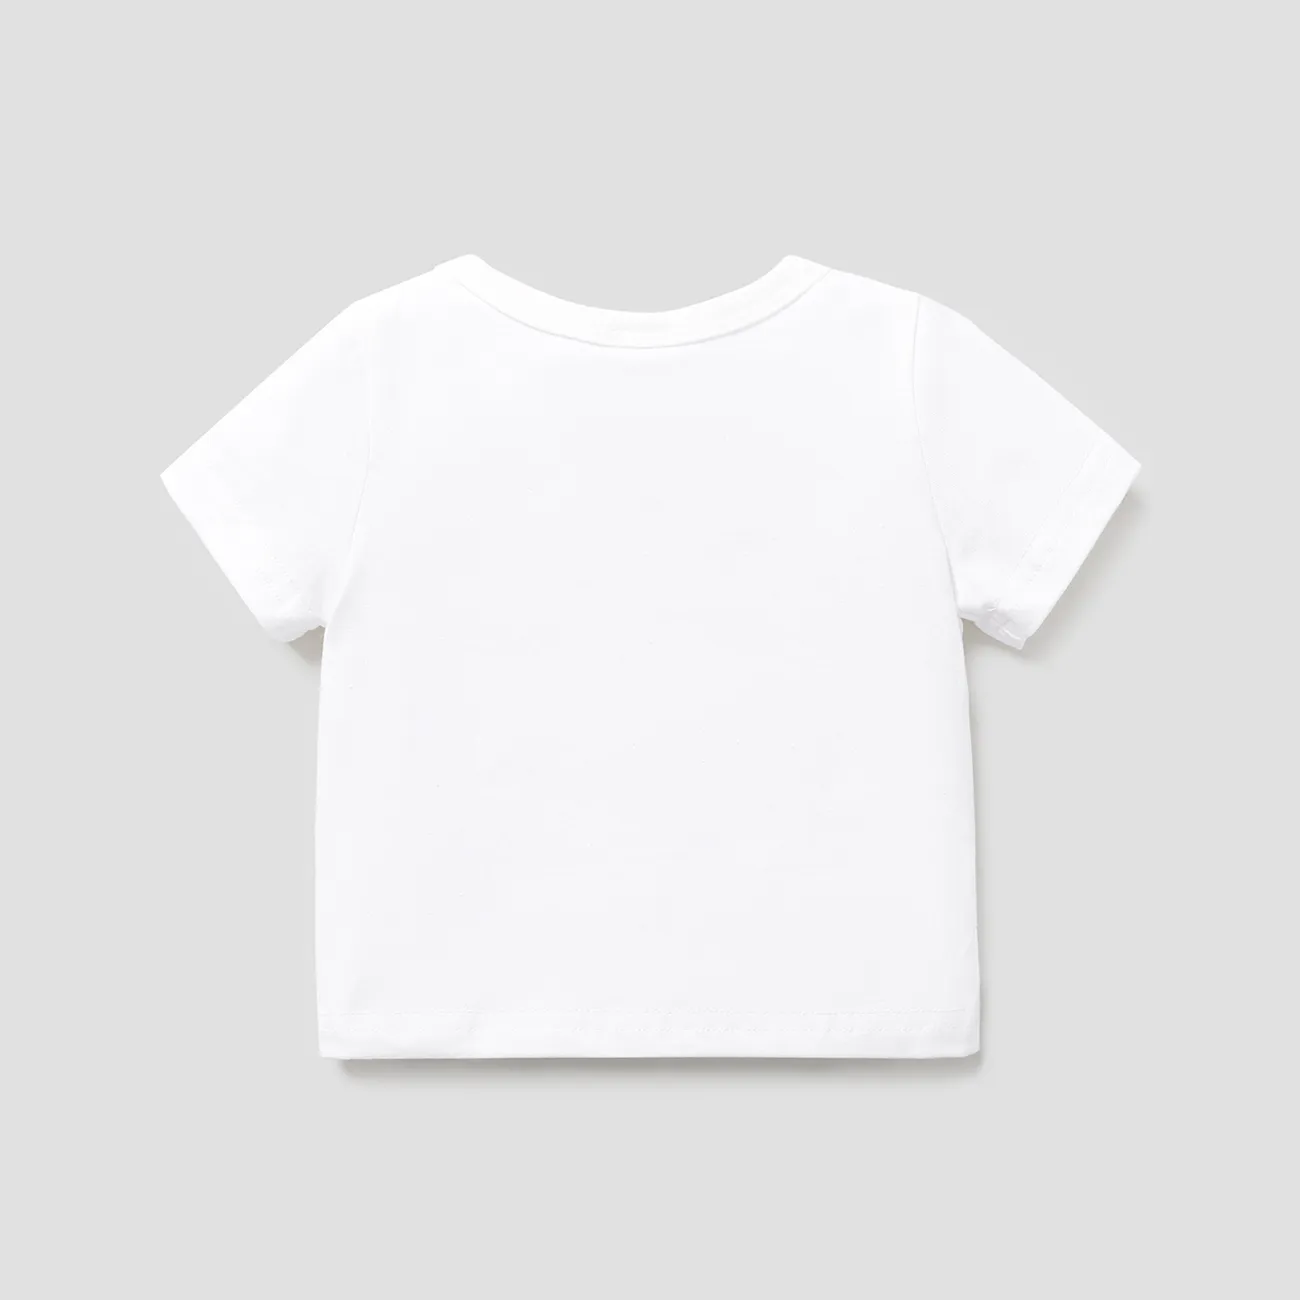 Vatertag Baby Unisex Lässig Kurzärmelig T-Shirts weiß big image 1